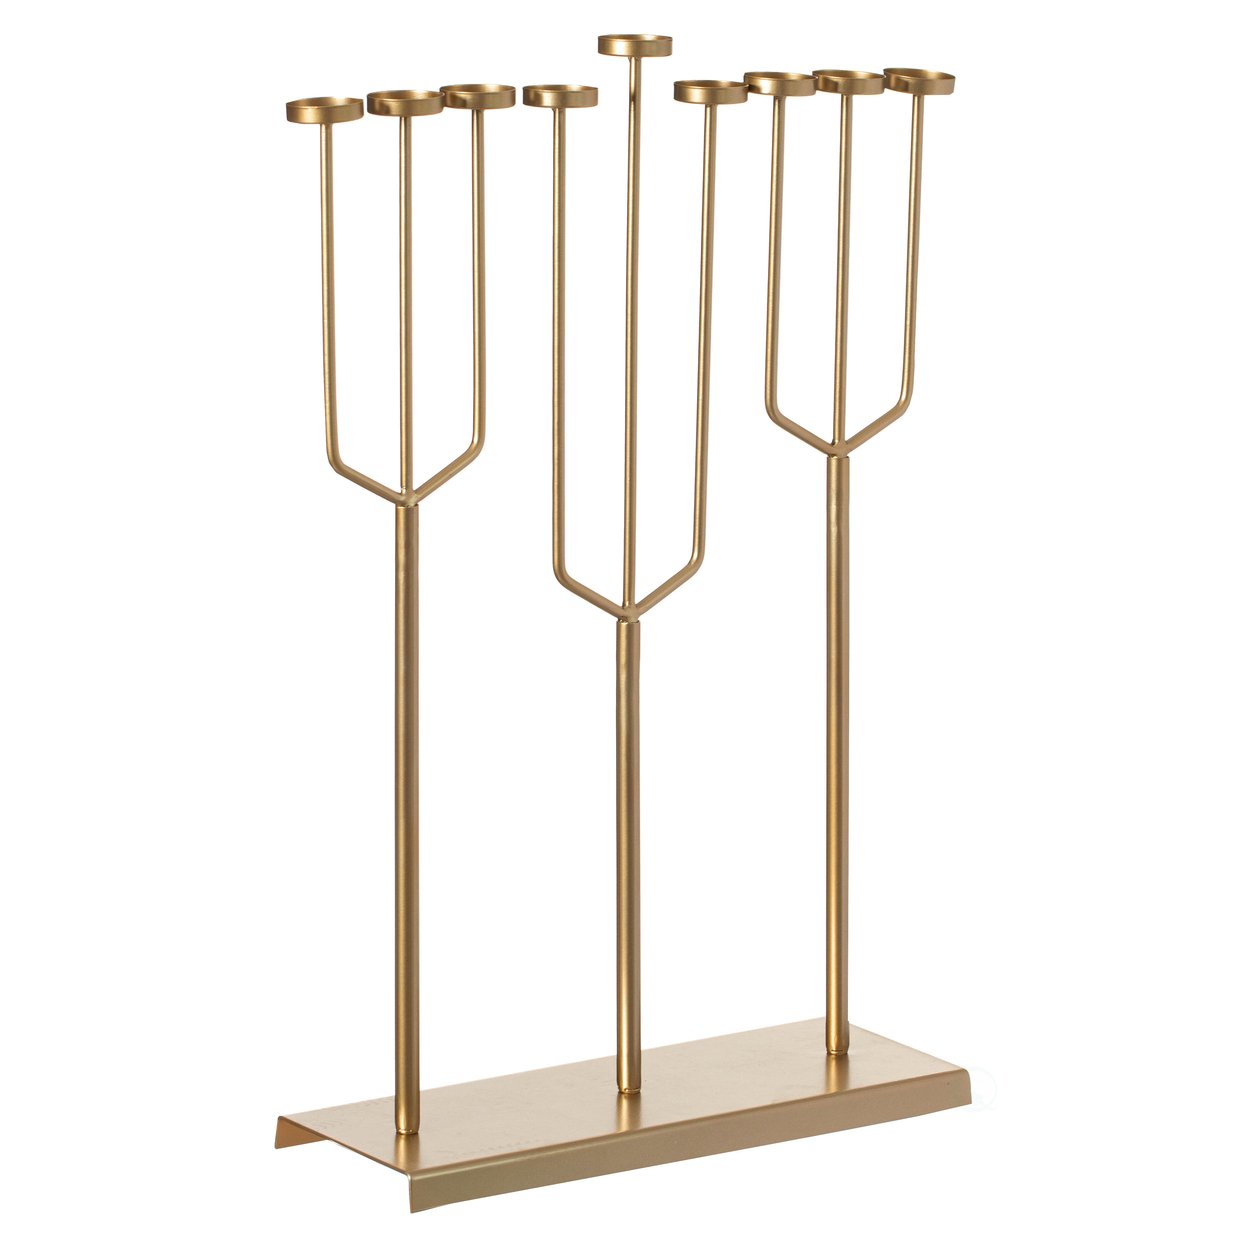 Modern Design Hanukkah Menorah Exceptional Presentational Piece, 9 Branch Tea Light Candle Holders - Gold, Large